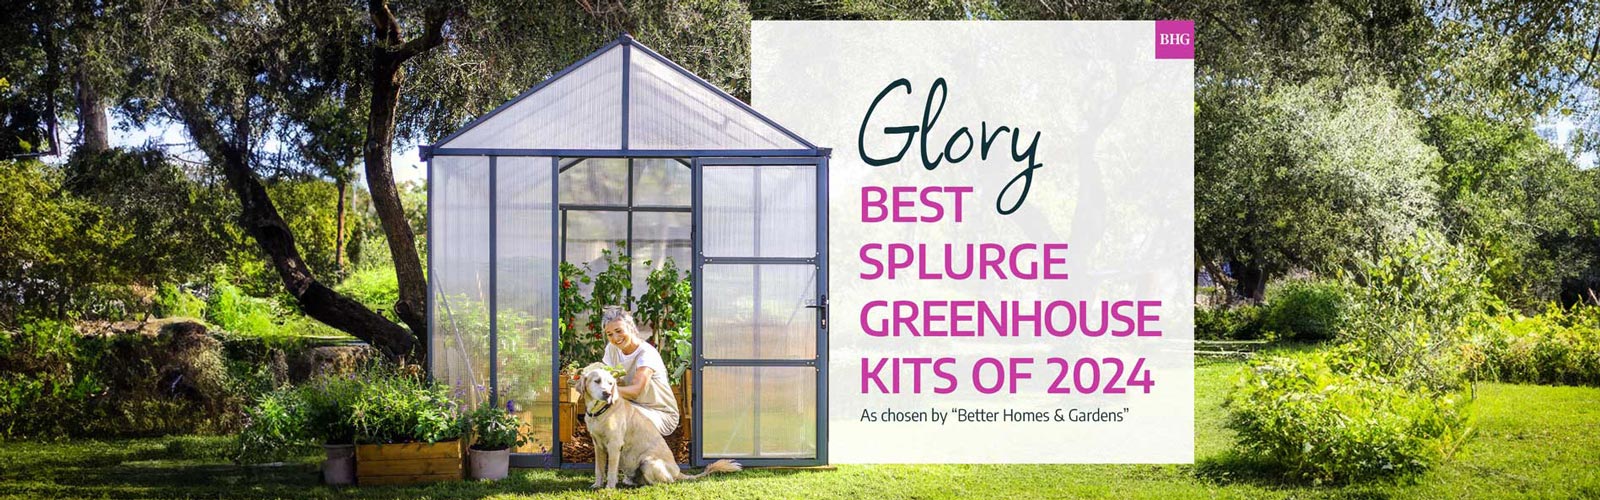 Palram Canopia Glory Greenhouses kit best spluge 2024